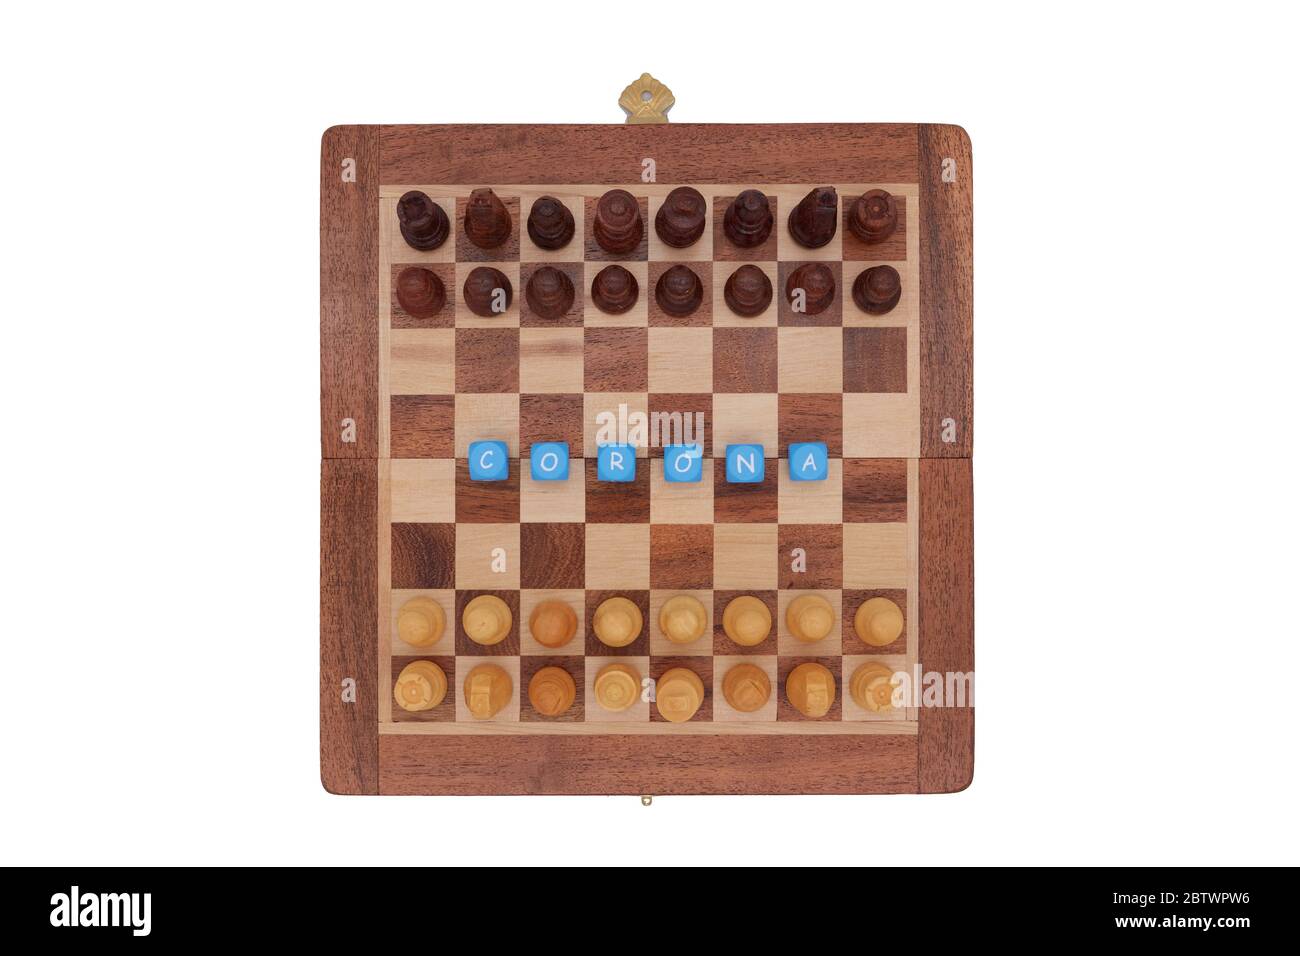 Complete chess pieces are short of Corona Virus. Bird's eye view Stock Photo